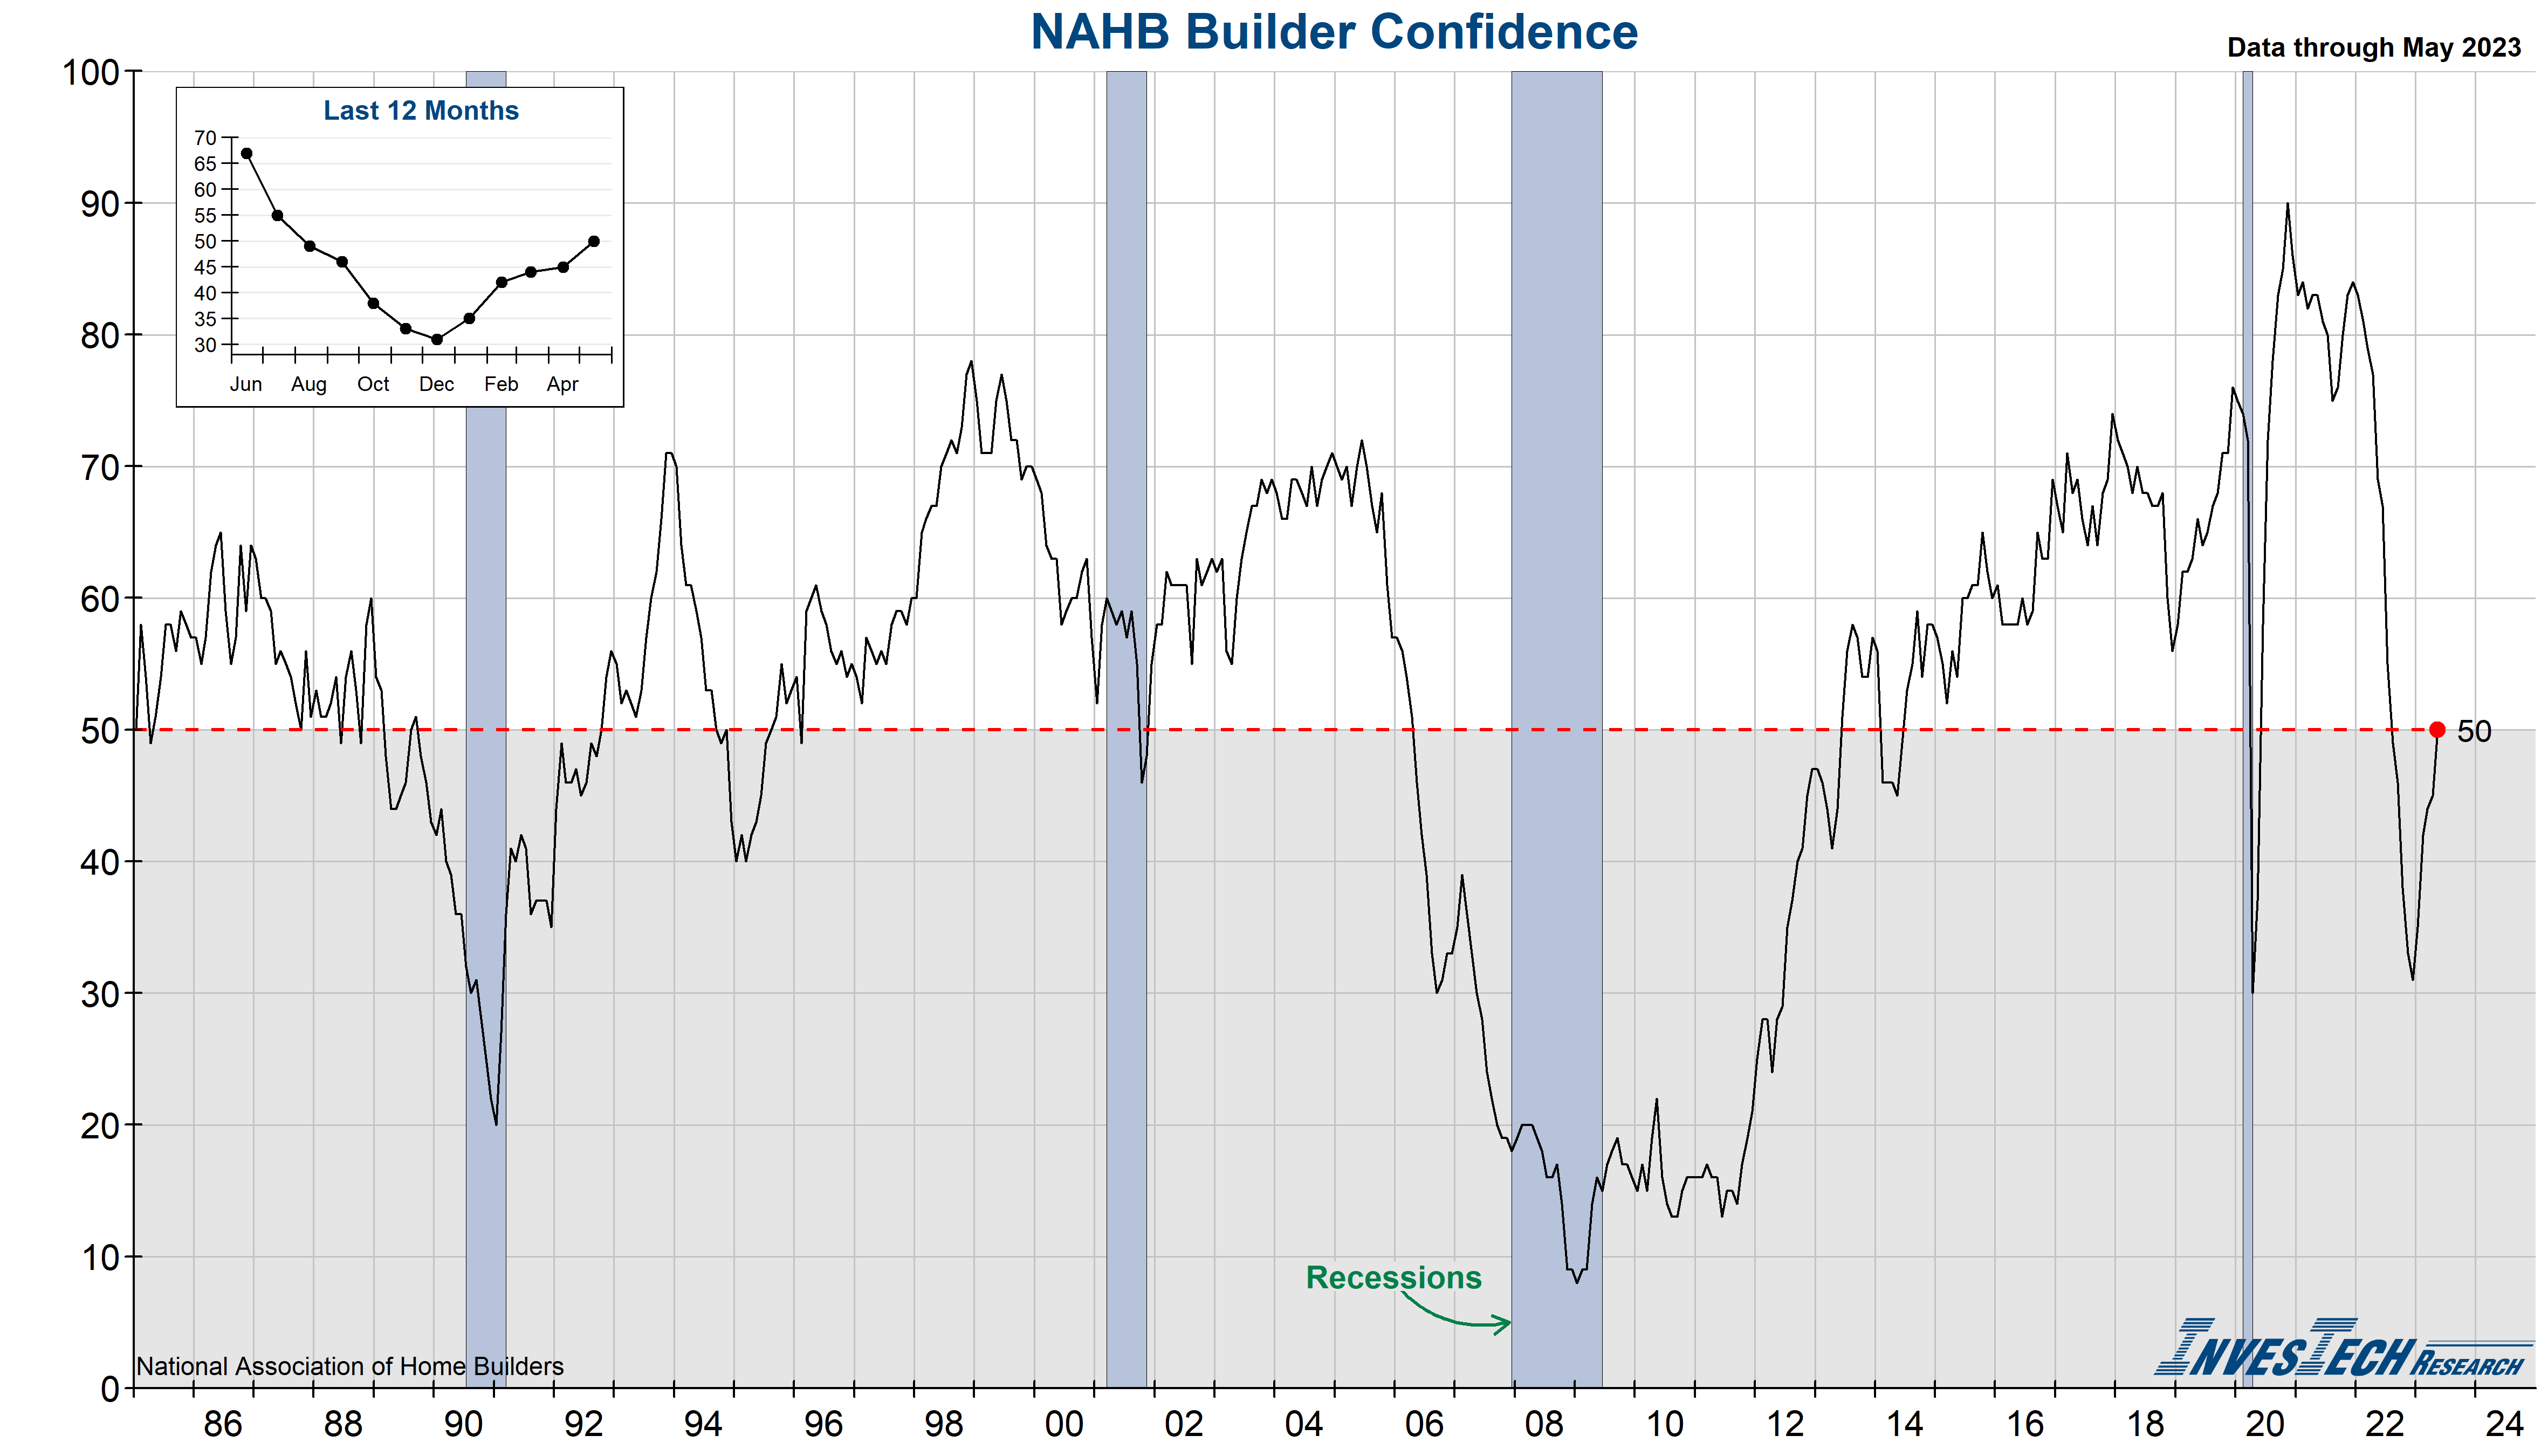 NAHB Housing Market Index/Builder Confidence